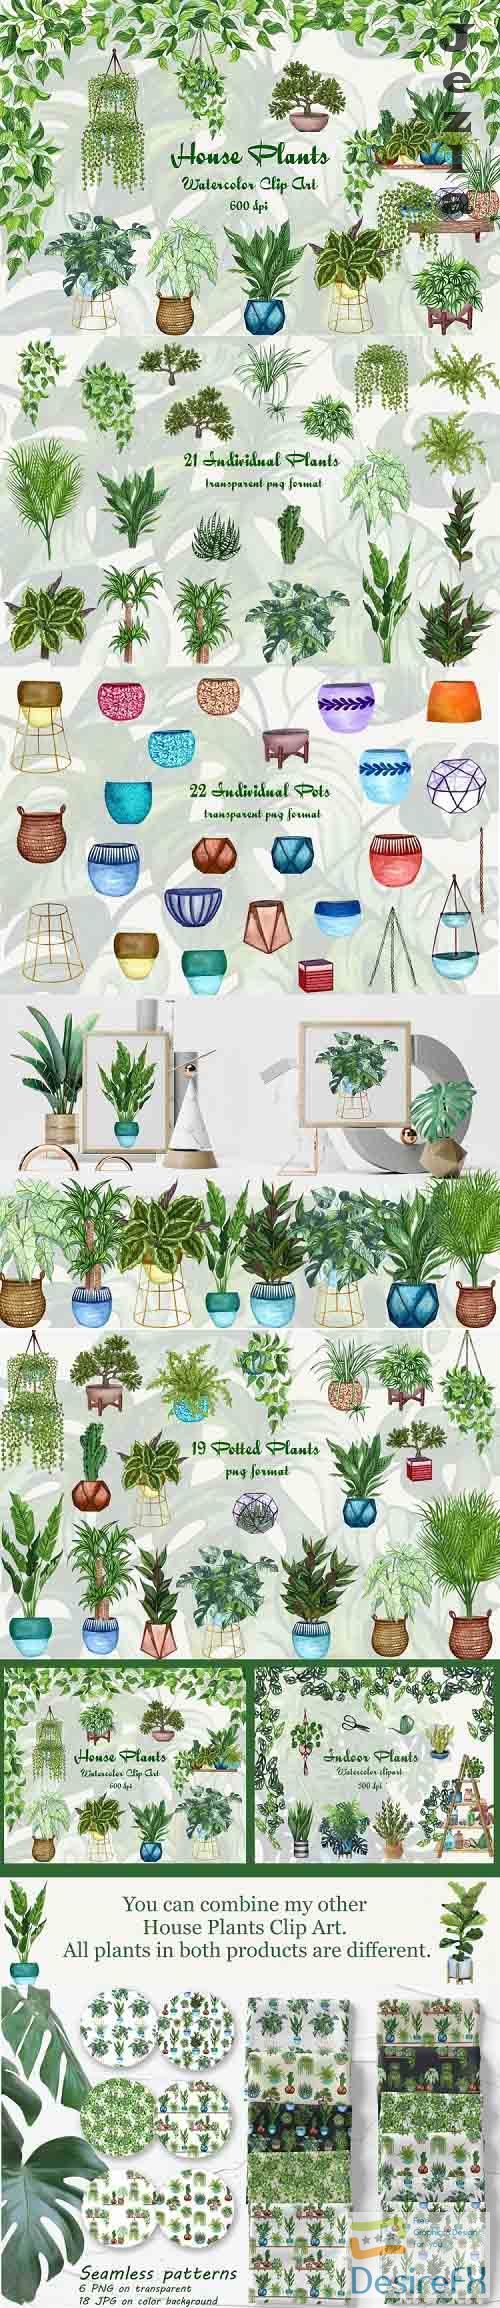 House Plants Watercolor Clip Art 600dpi - 611501